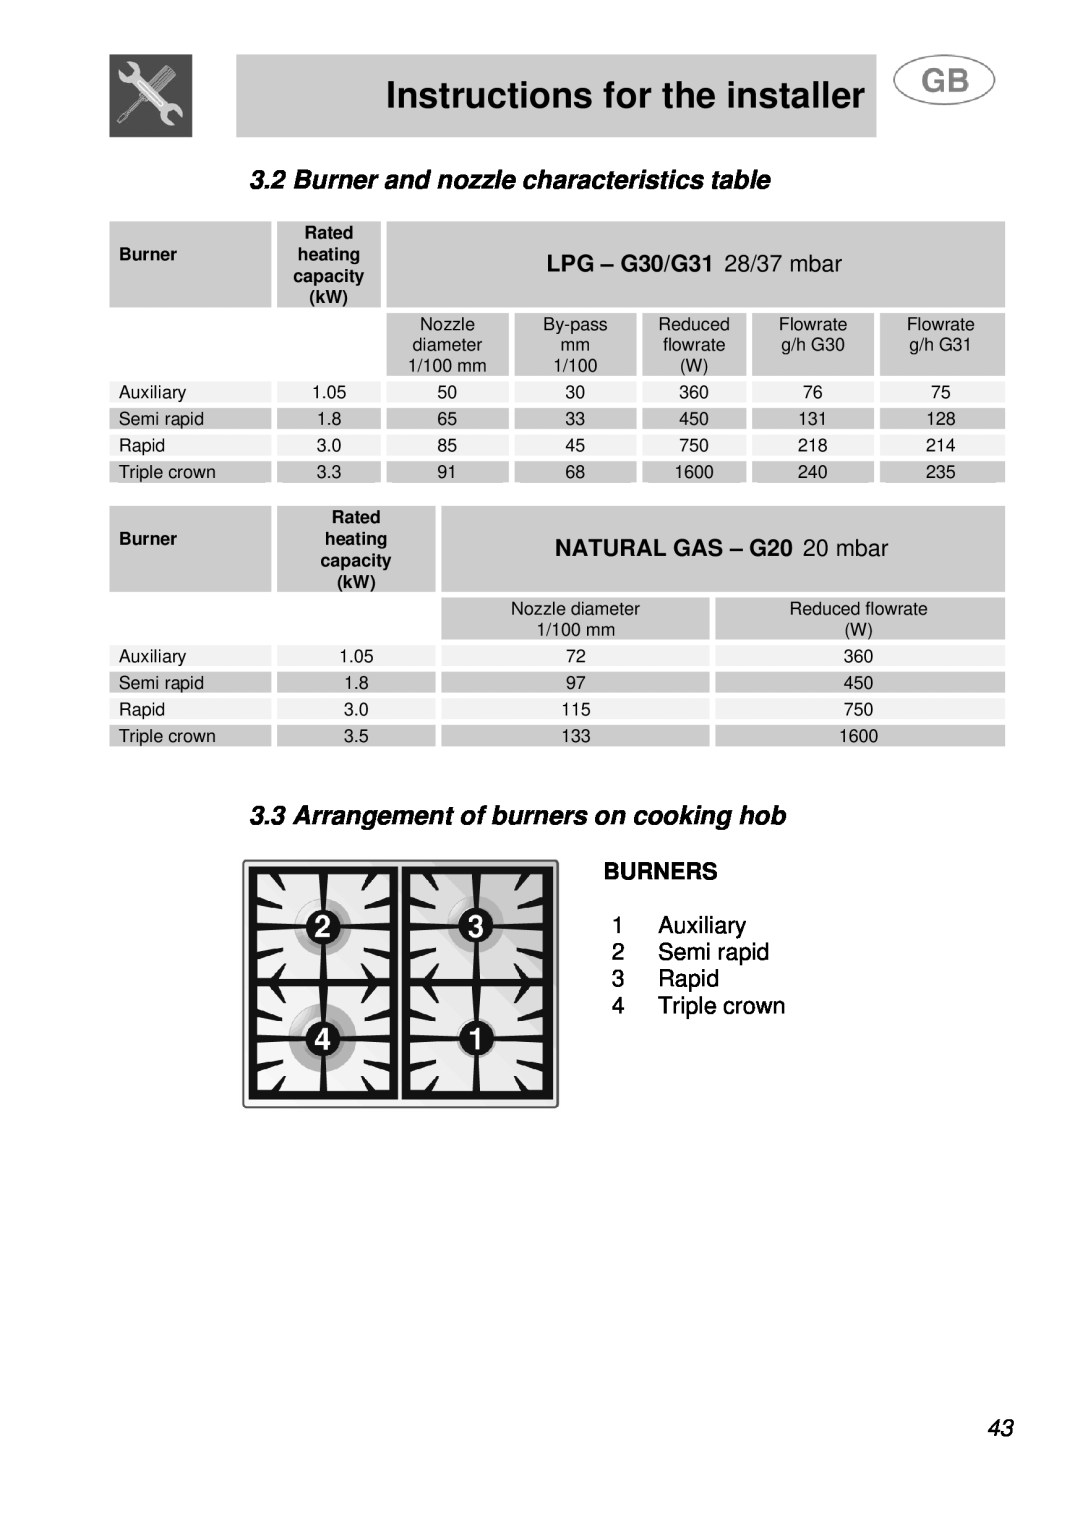 Smeg A41A Burner and nozzle characteristics table, 3.3Arrangement of burners on cooking hob, LPG – G30/G31 28/37 mbar 